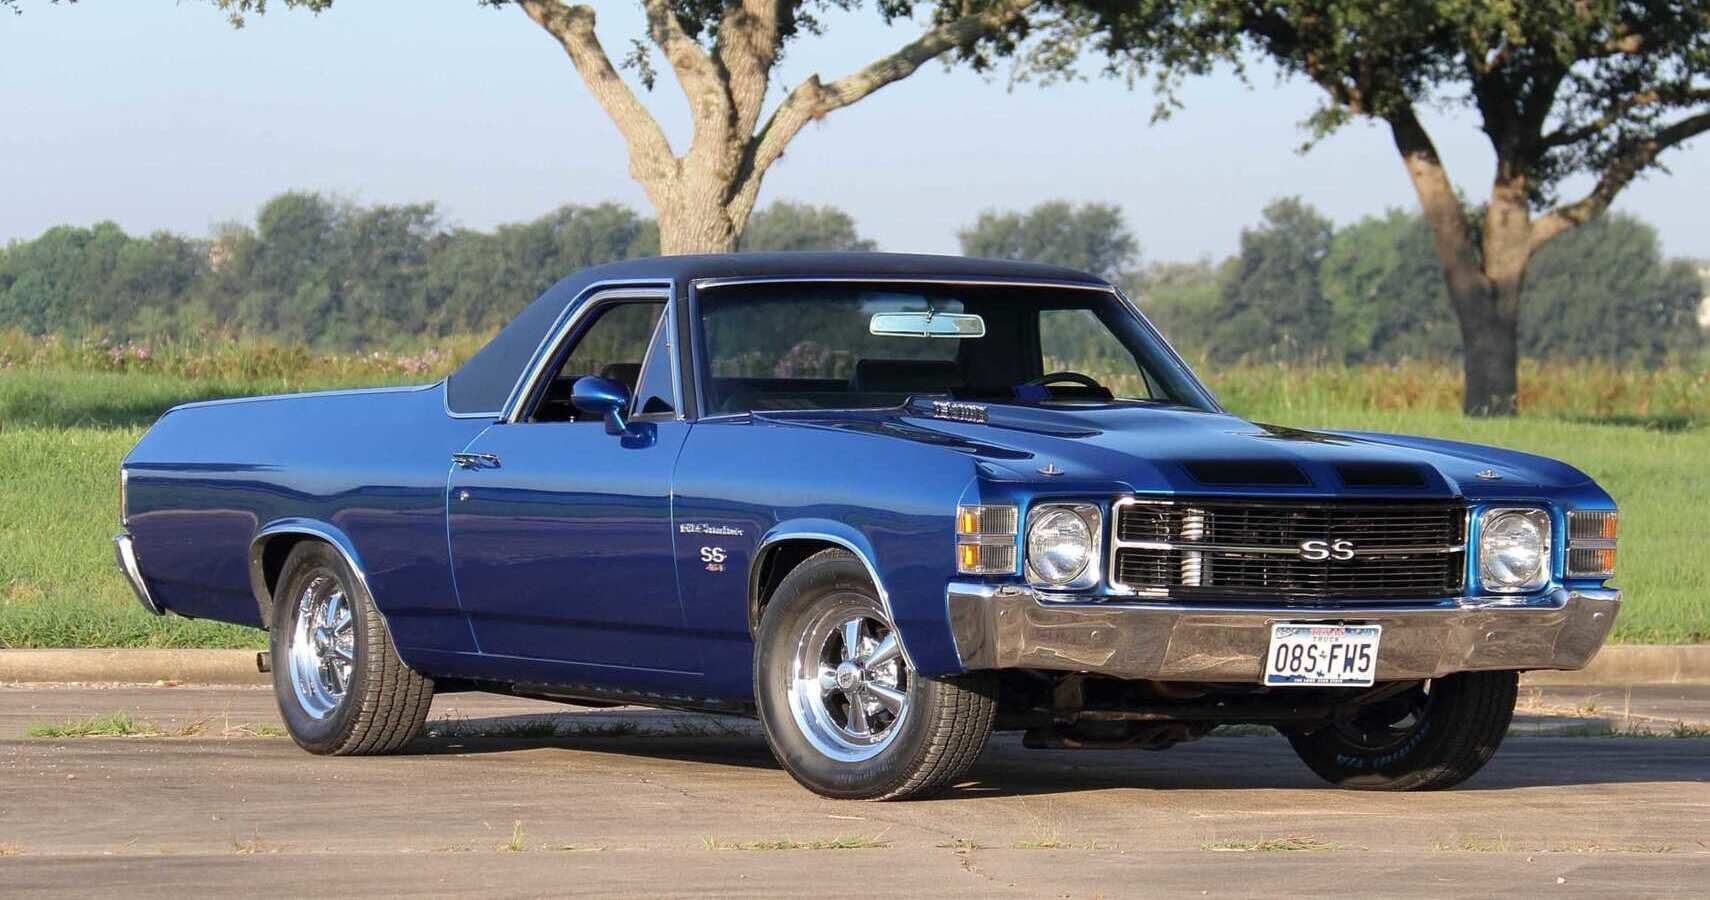 A blue 1971 Chevrolet El Camino SS parked